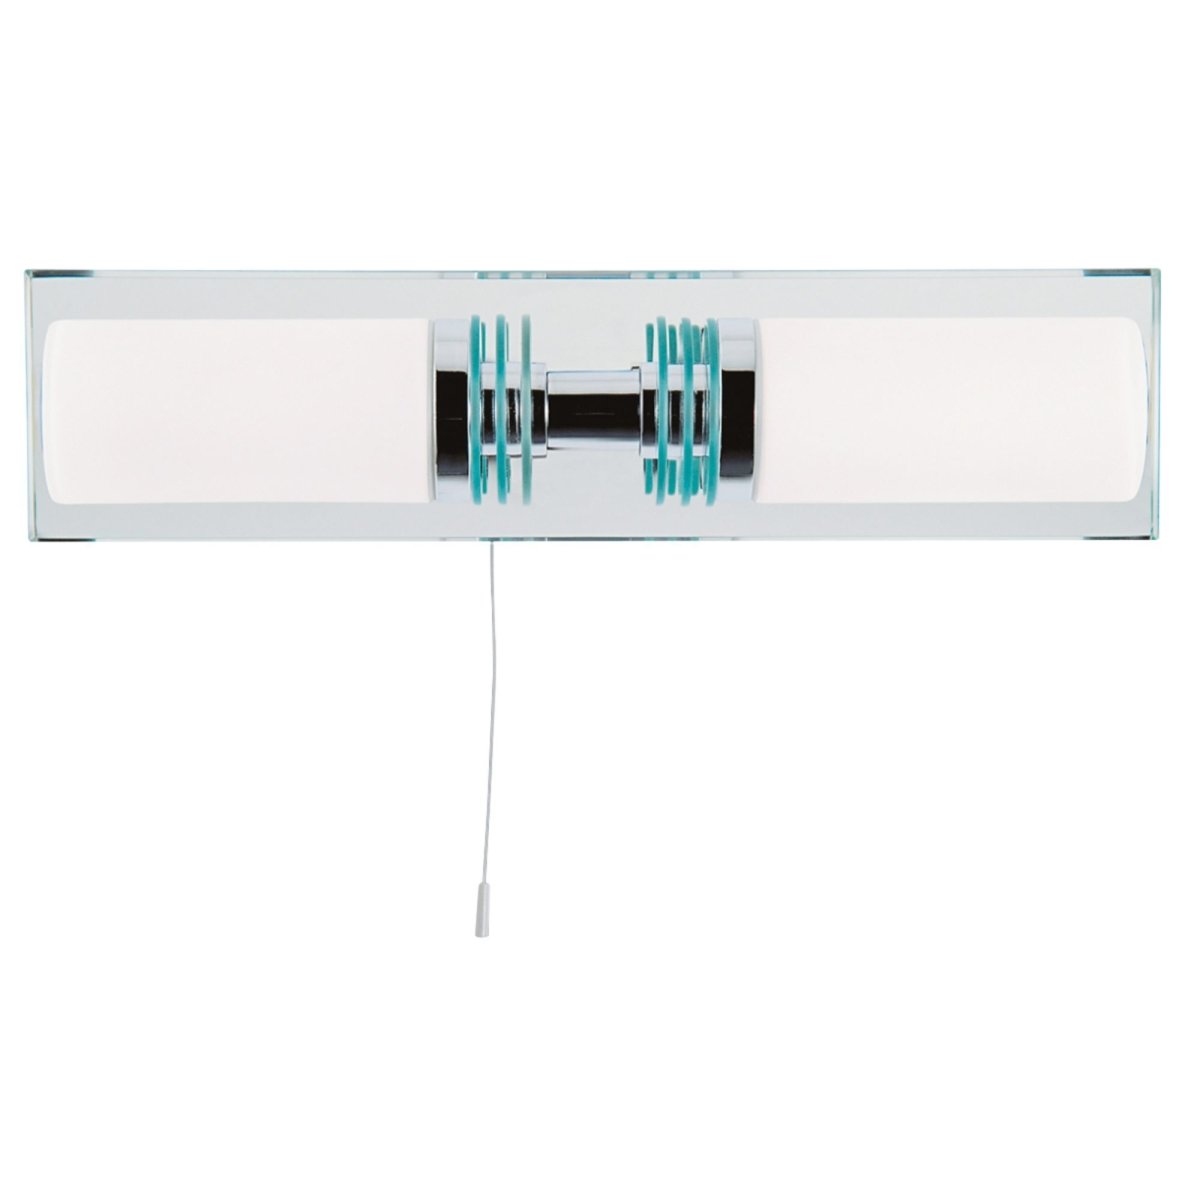 2 Modern Bathroom Chrome Mirror Backplate Wall Fitting Bracket Light - Bonnypack